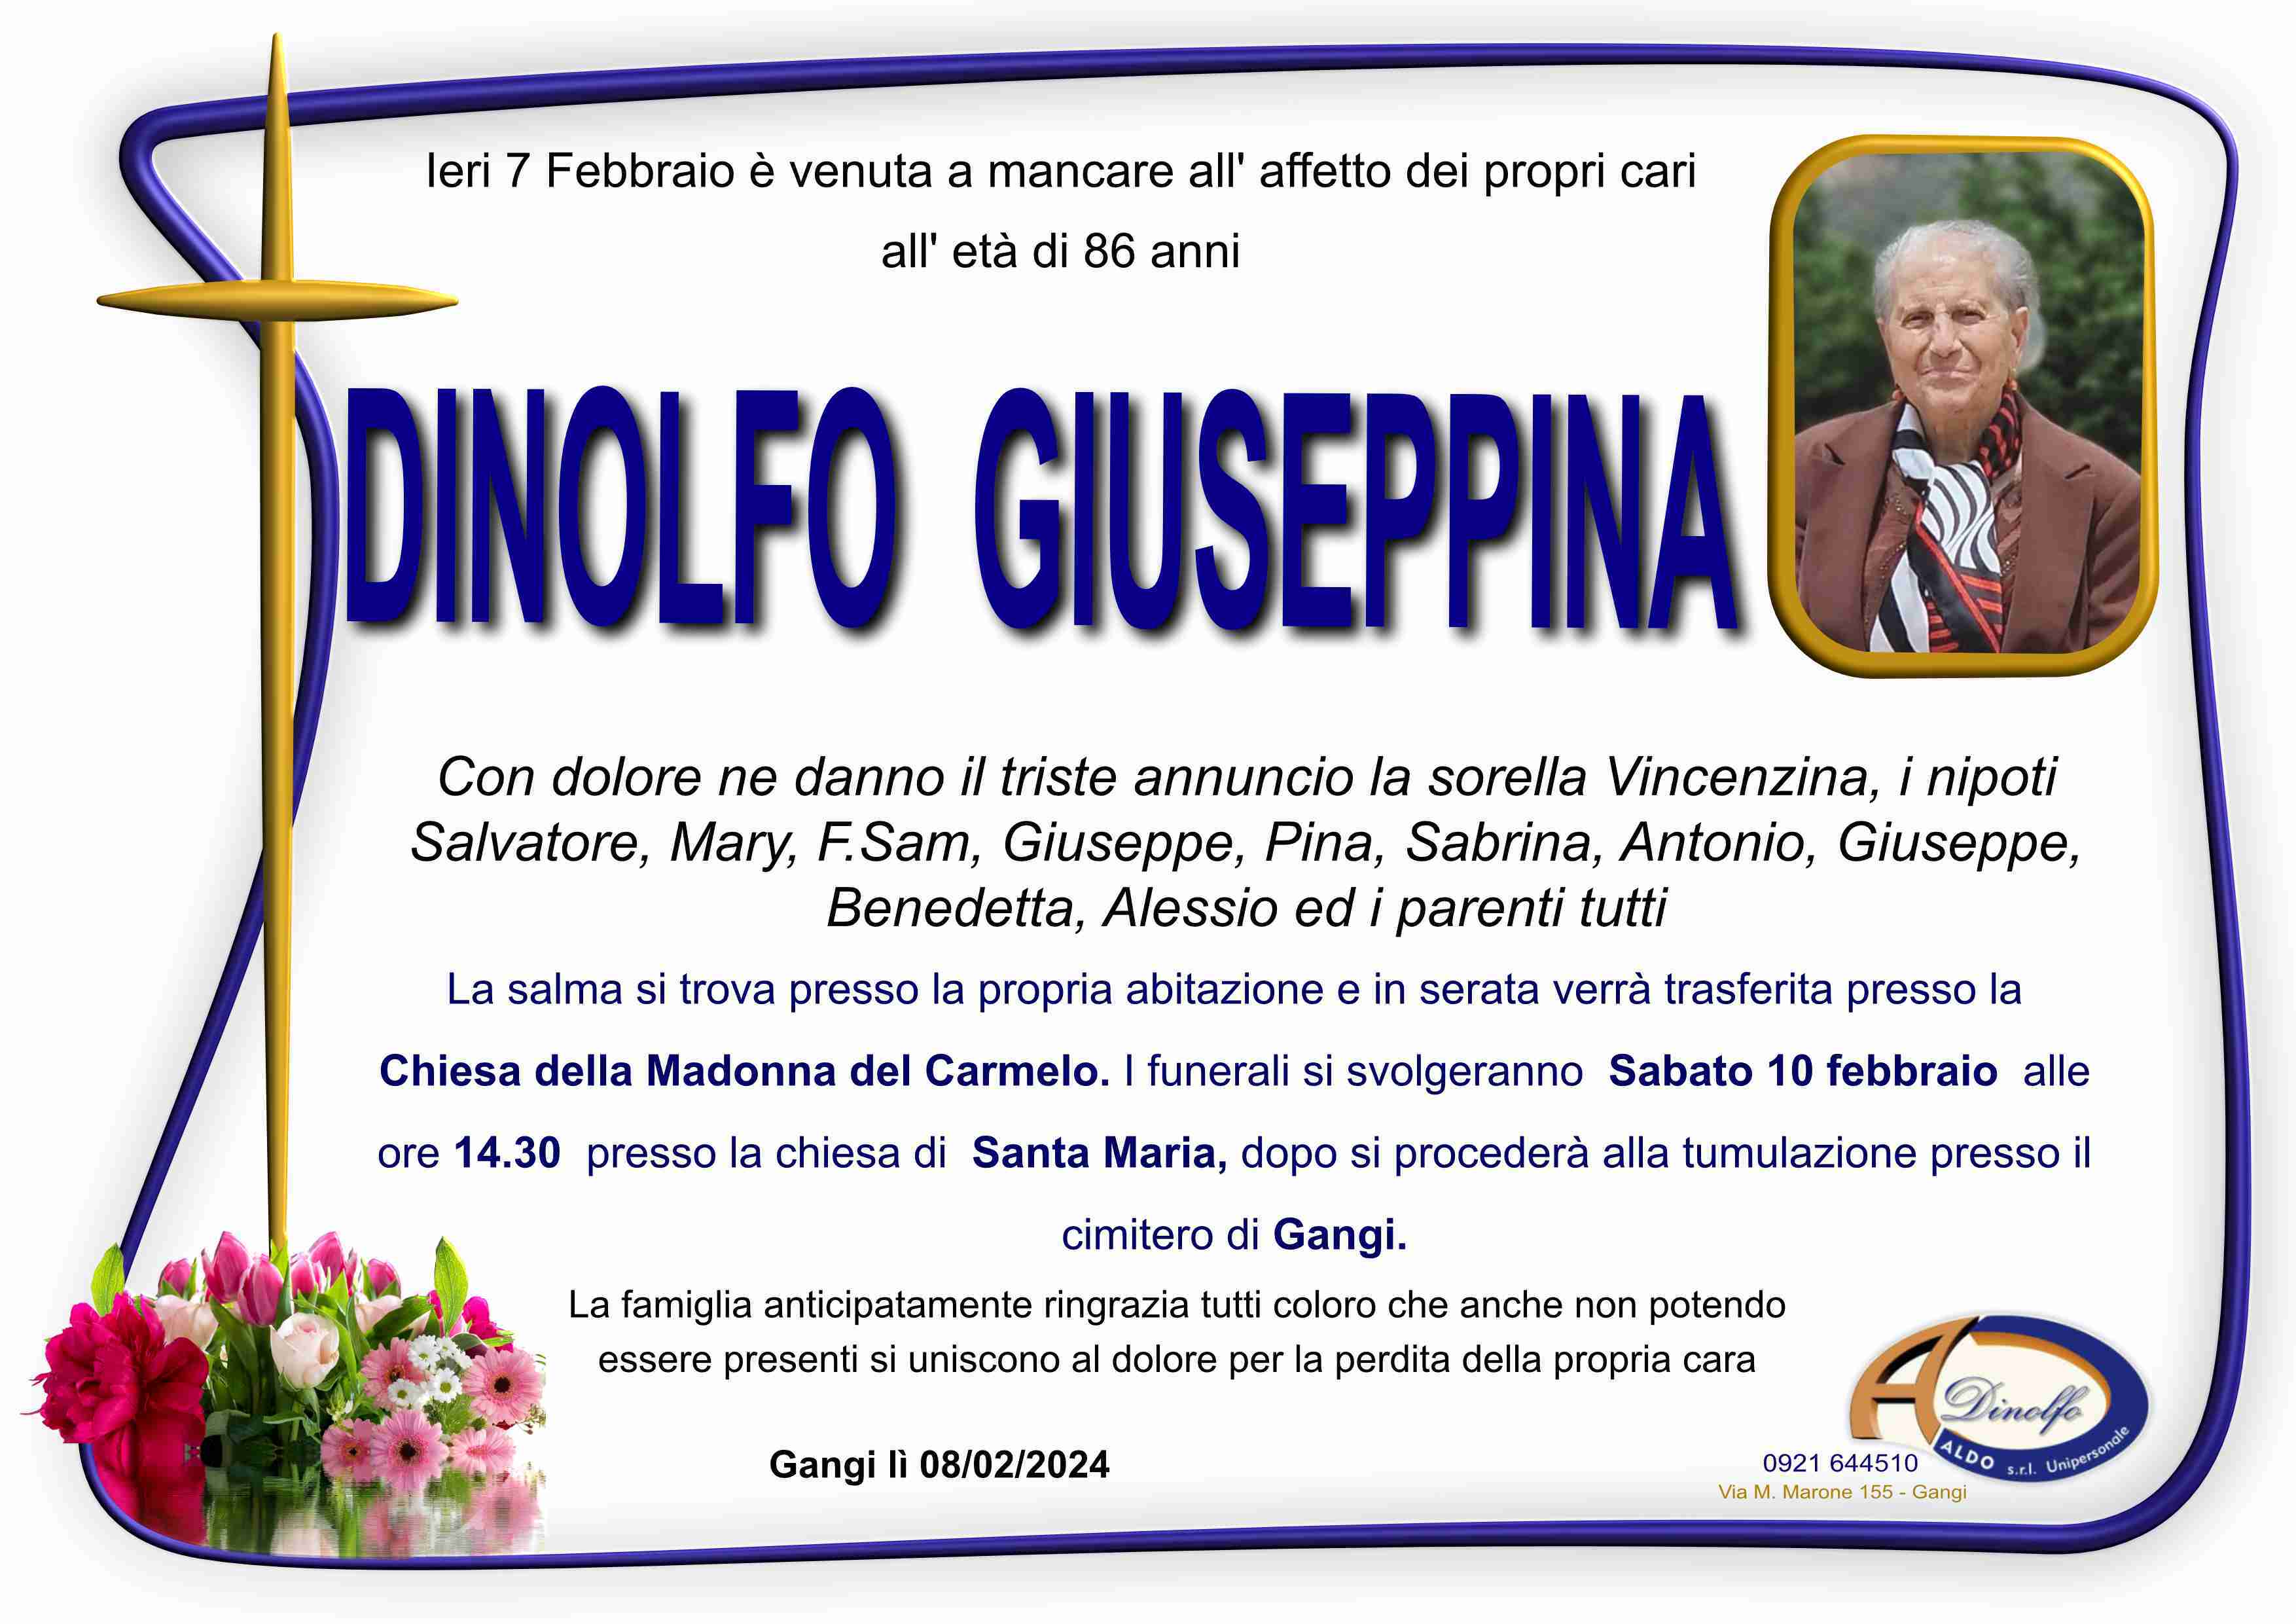 Dinolfo Giuseppina